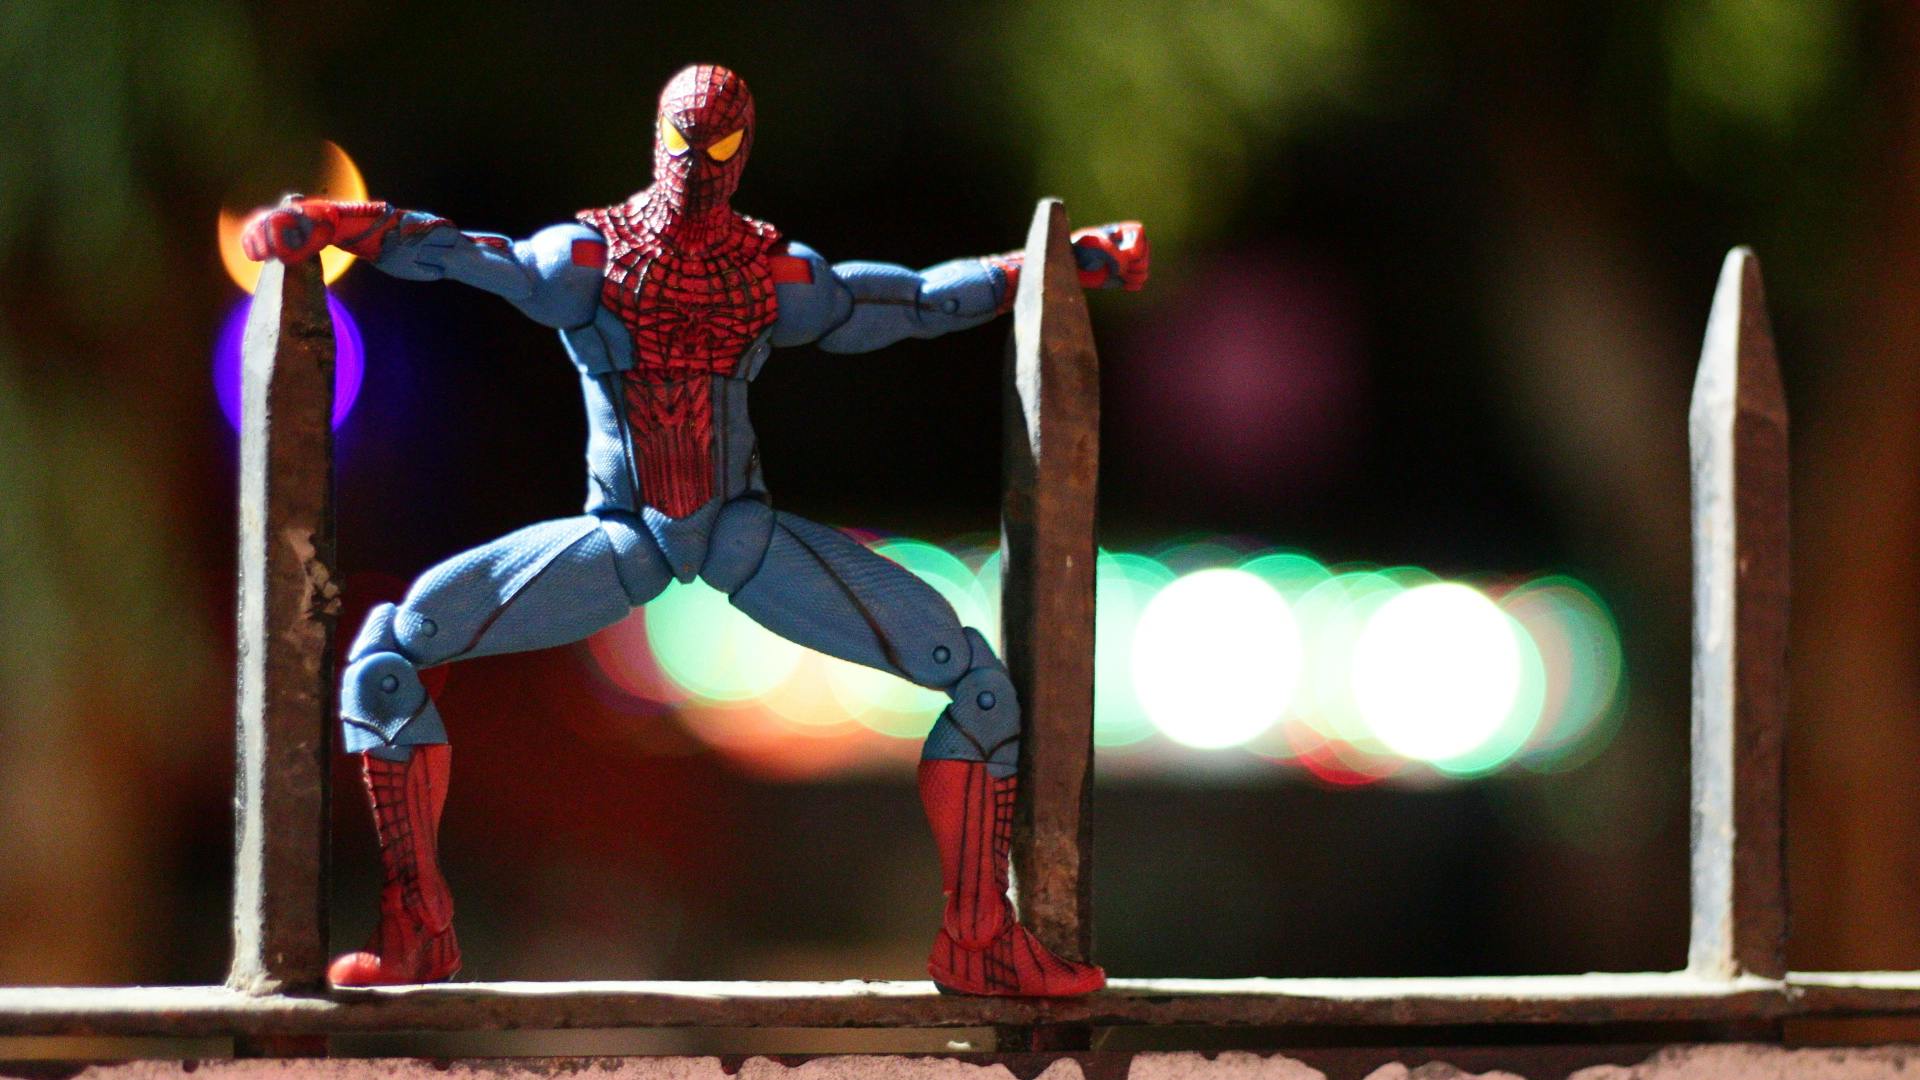 Free stock photo of #spiderman #hero #amigo #santiagodechile